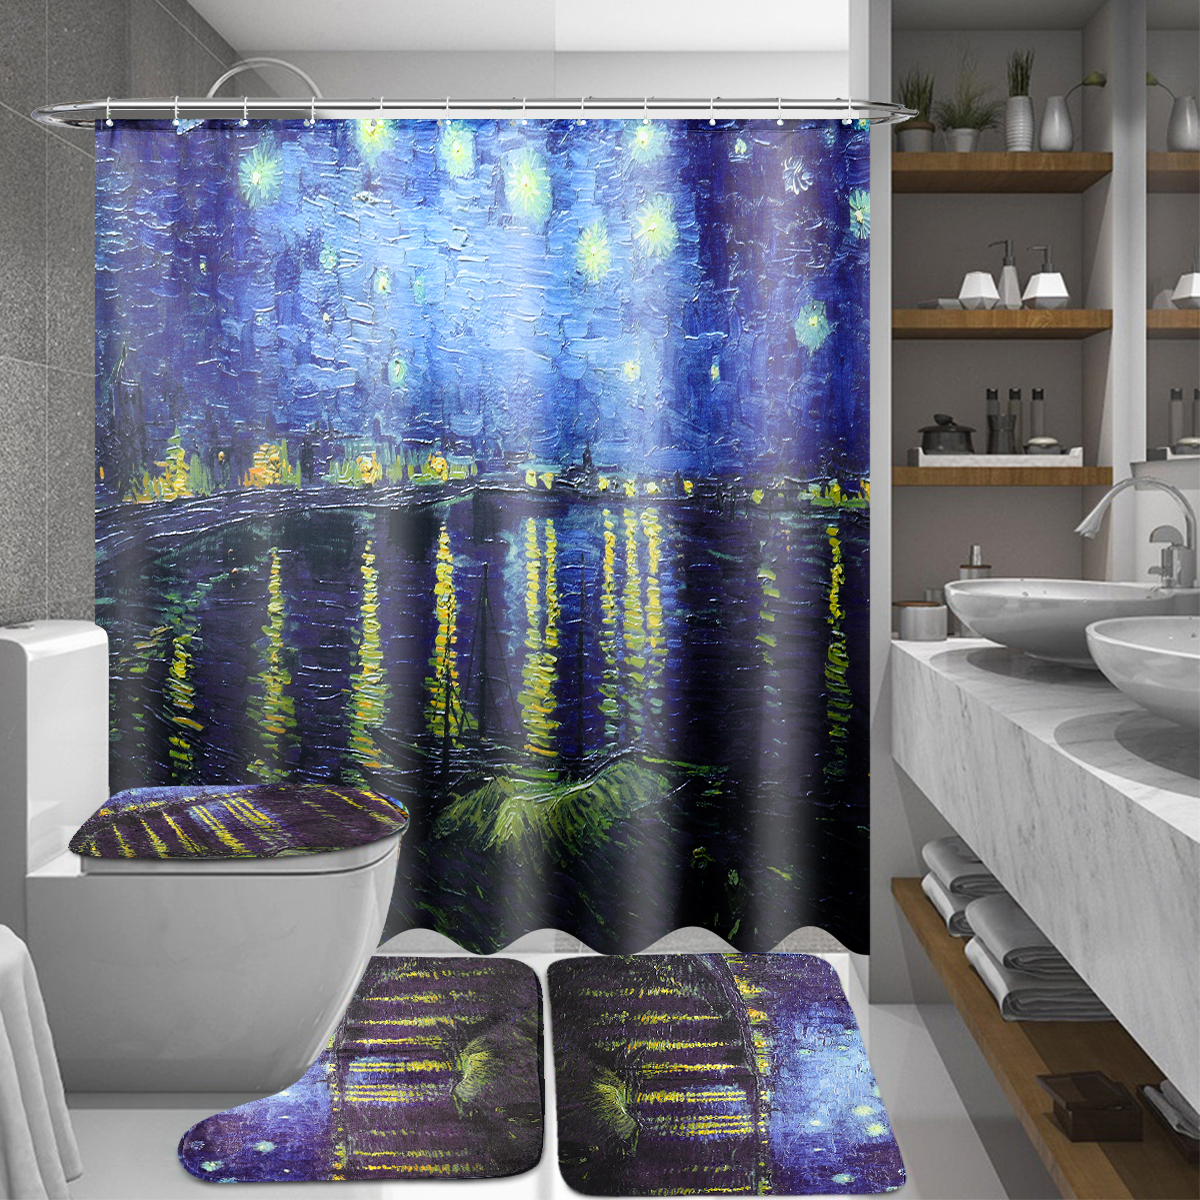 

180x180cm Rhone River Night Ванная комната Крышка занавески для душа Крышка для унитаза Коврик Набор